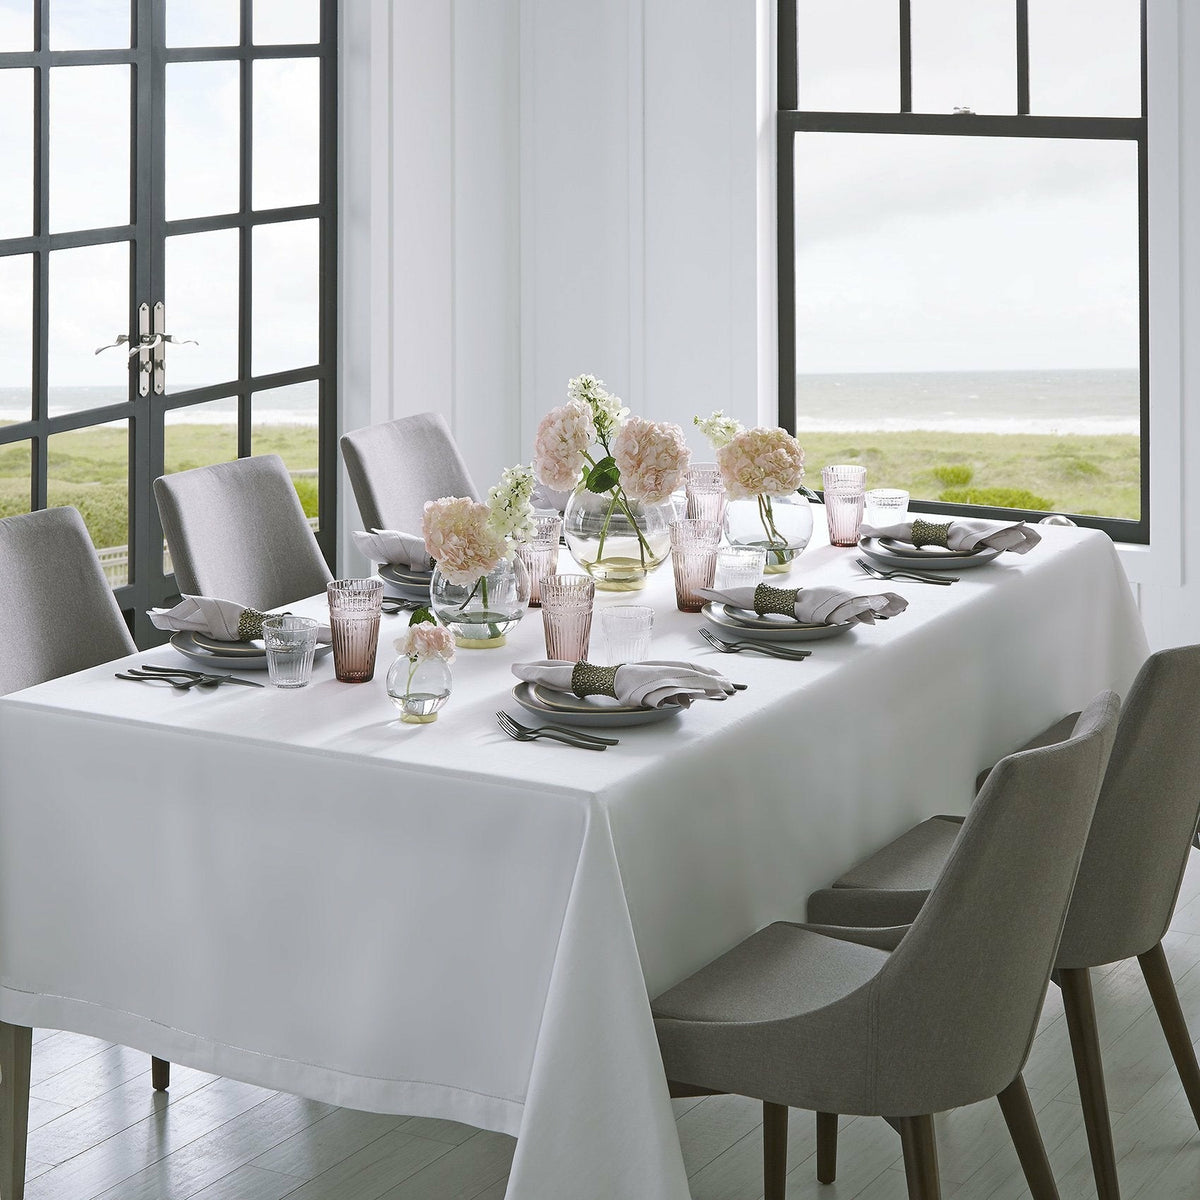 Luxury Linen Tablecloths - Designer Table Linens